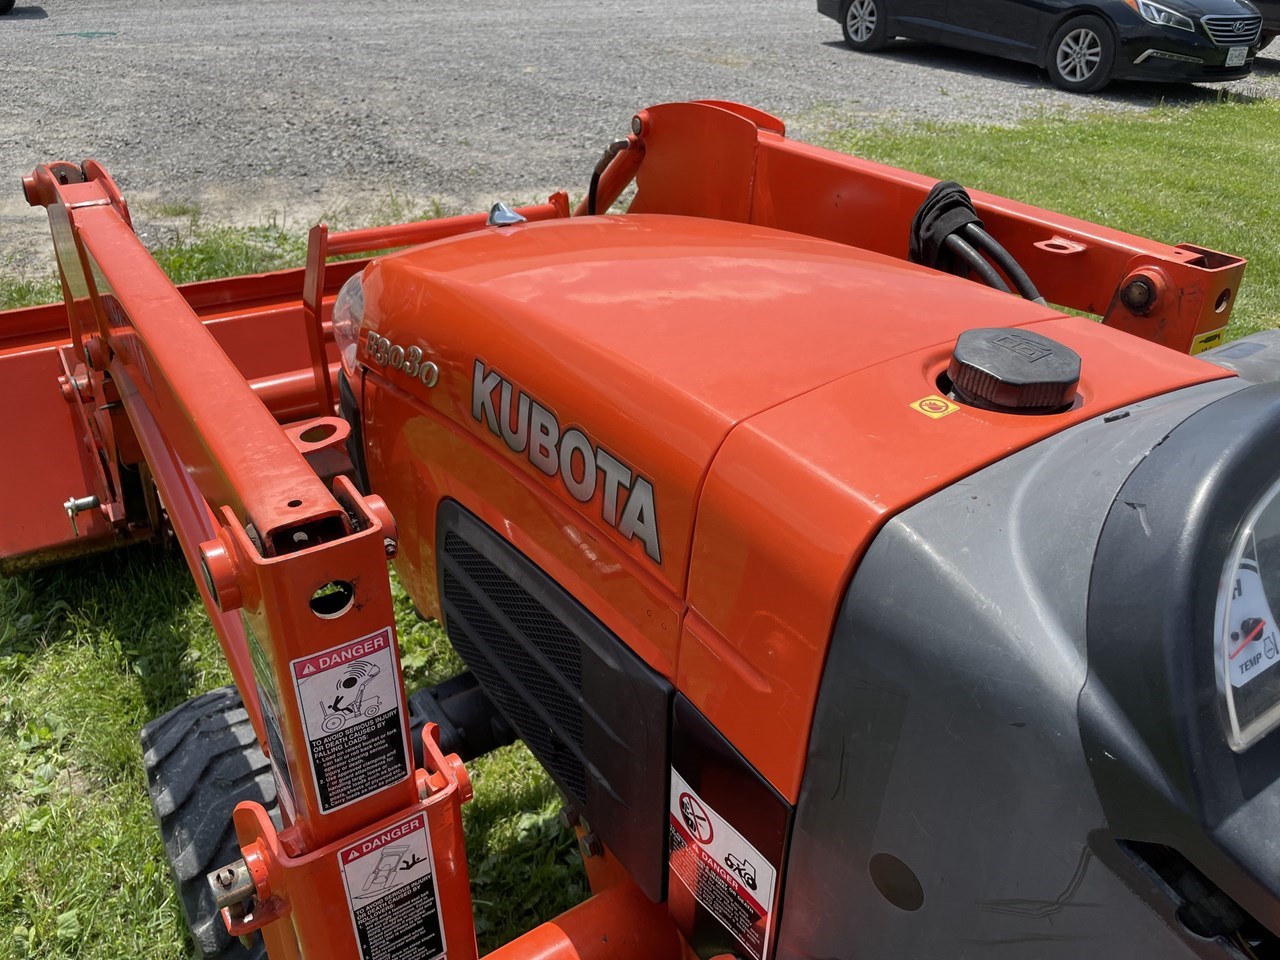 2006 Kubota B3030 Tractor - Compact Utility For Sale